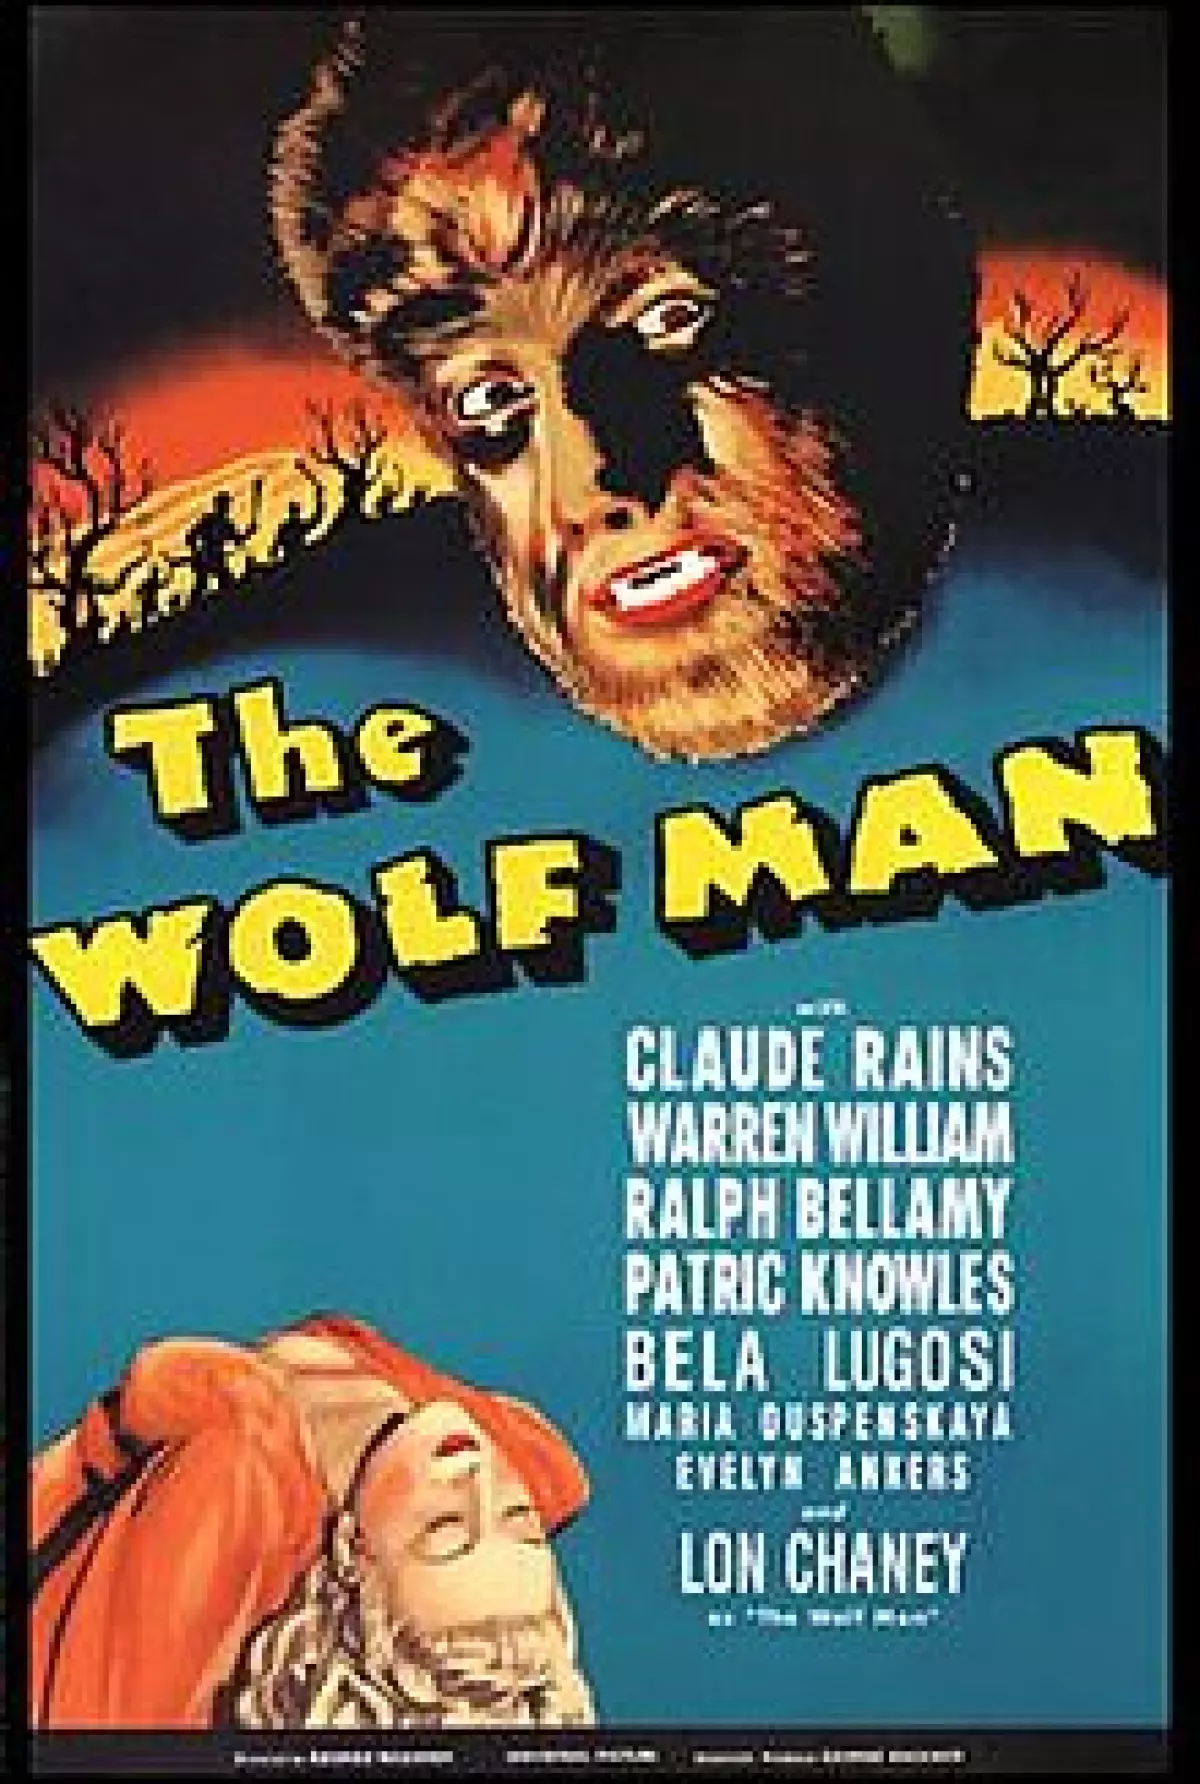 The Wolf Man (1941 film)